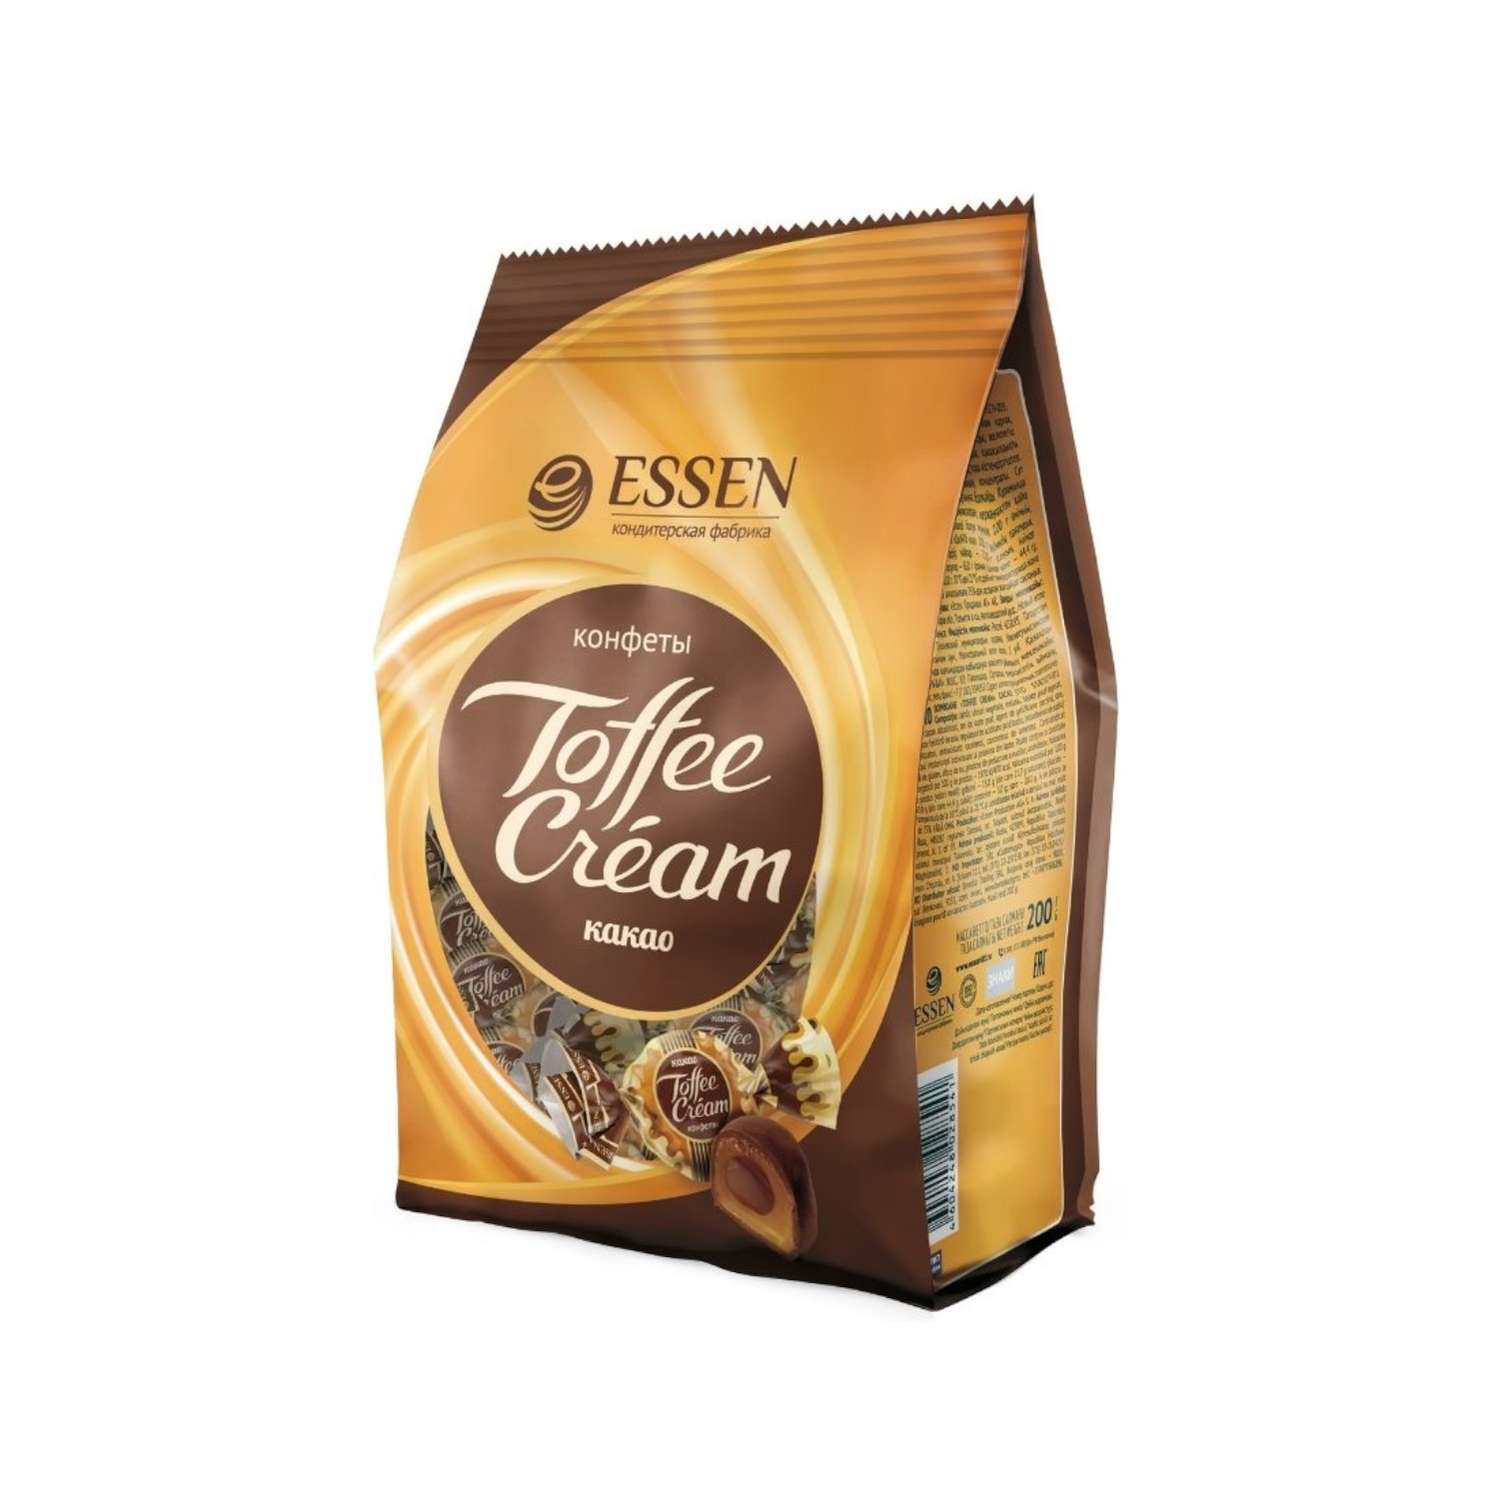 Конфеты Essen Toffee cream какао 200г - фото 1